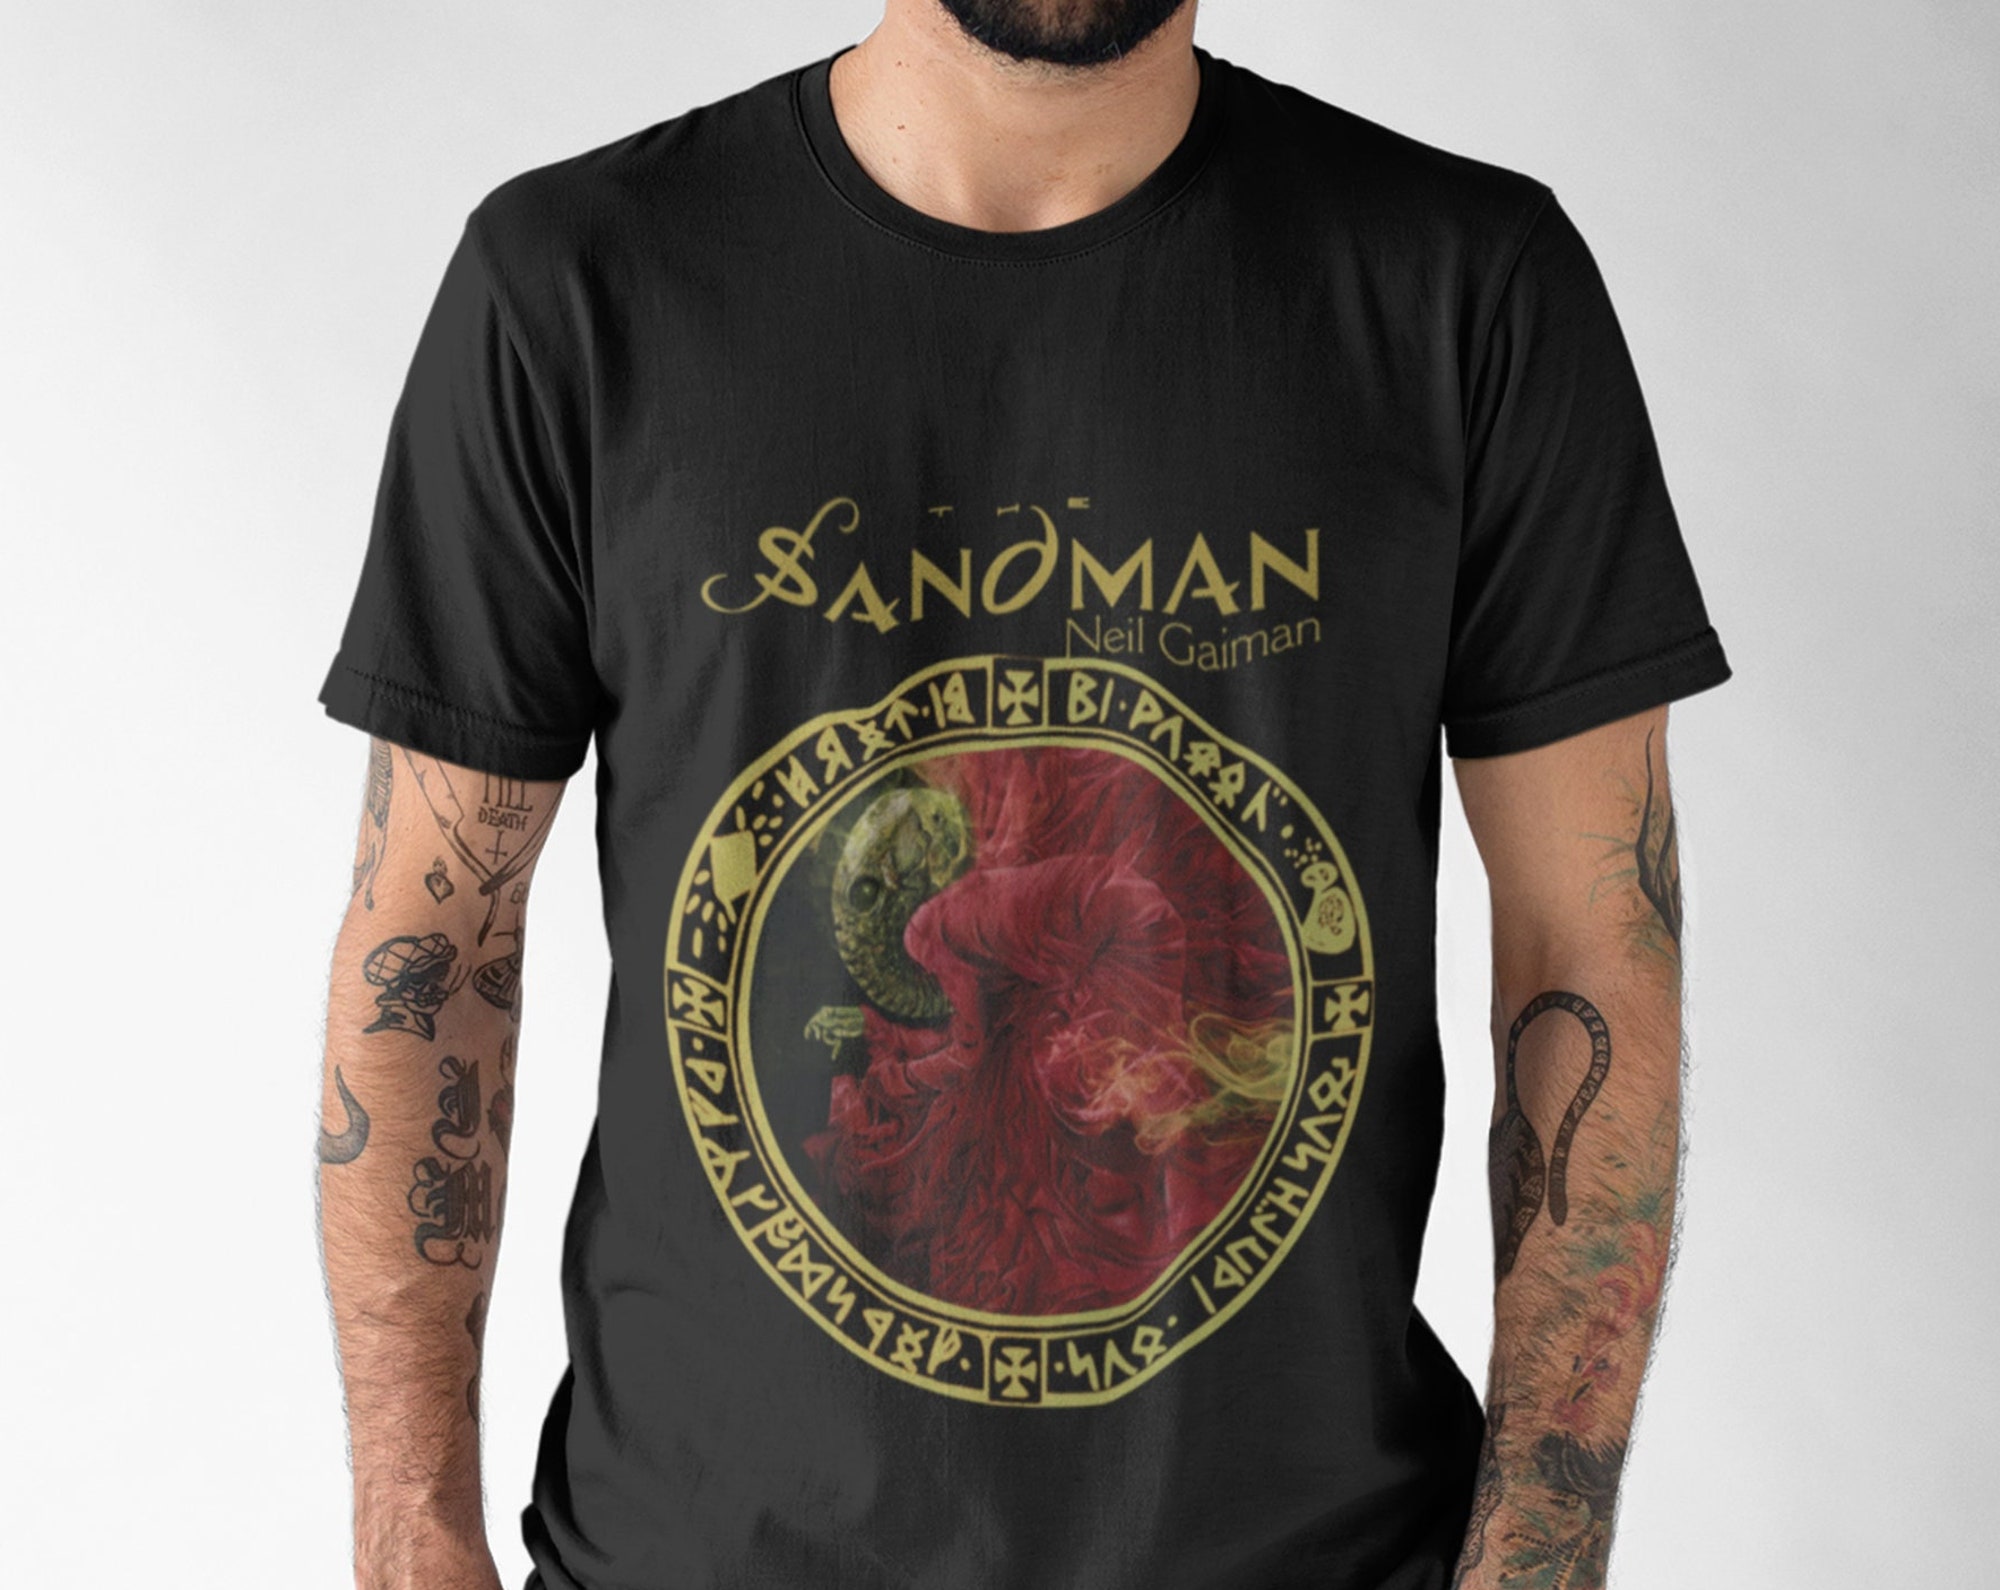 The Sandman Neil Gaiman T-shirt